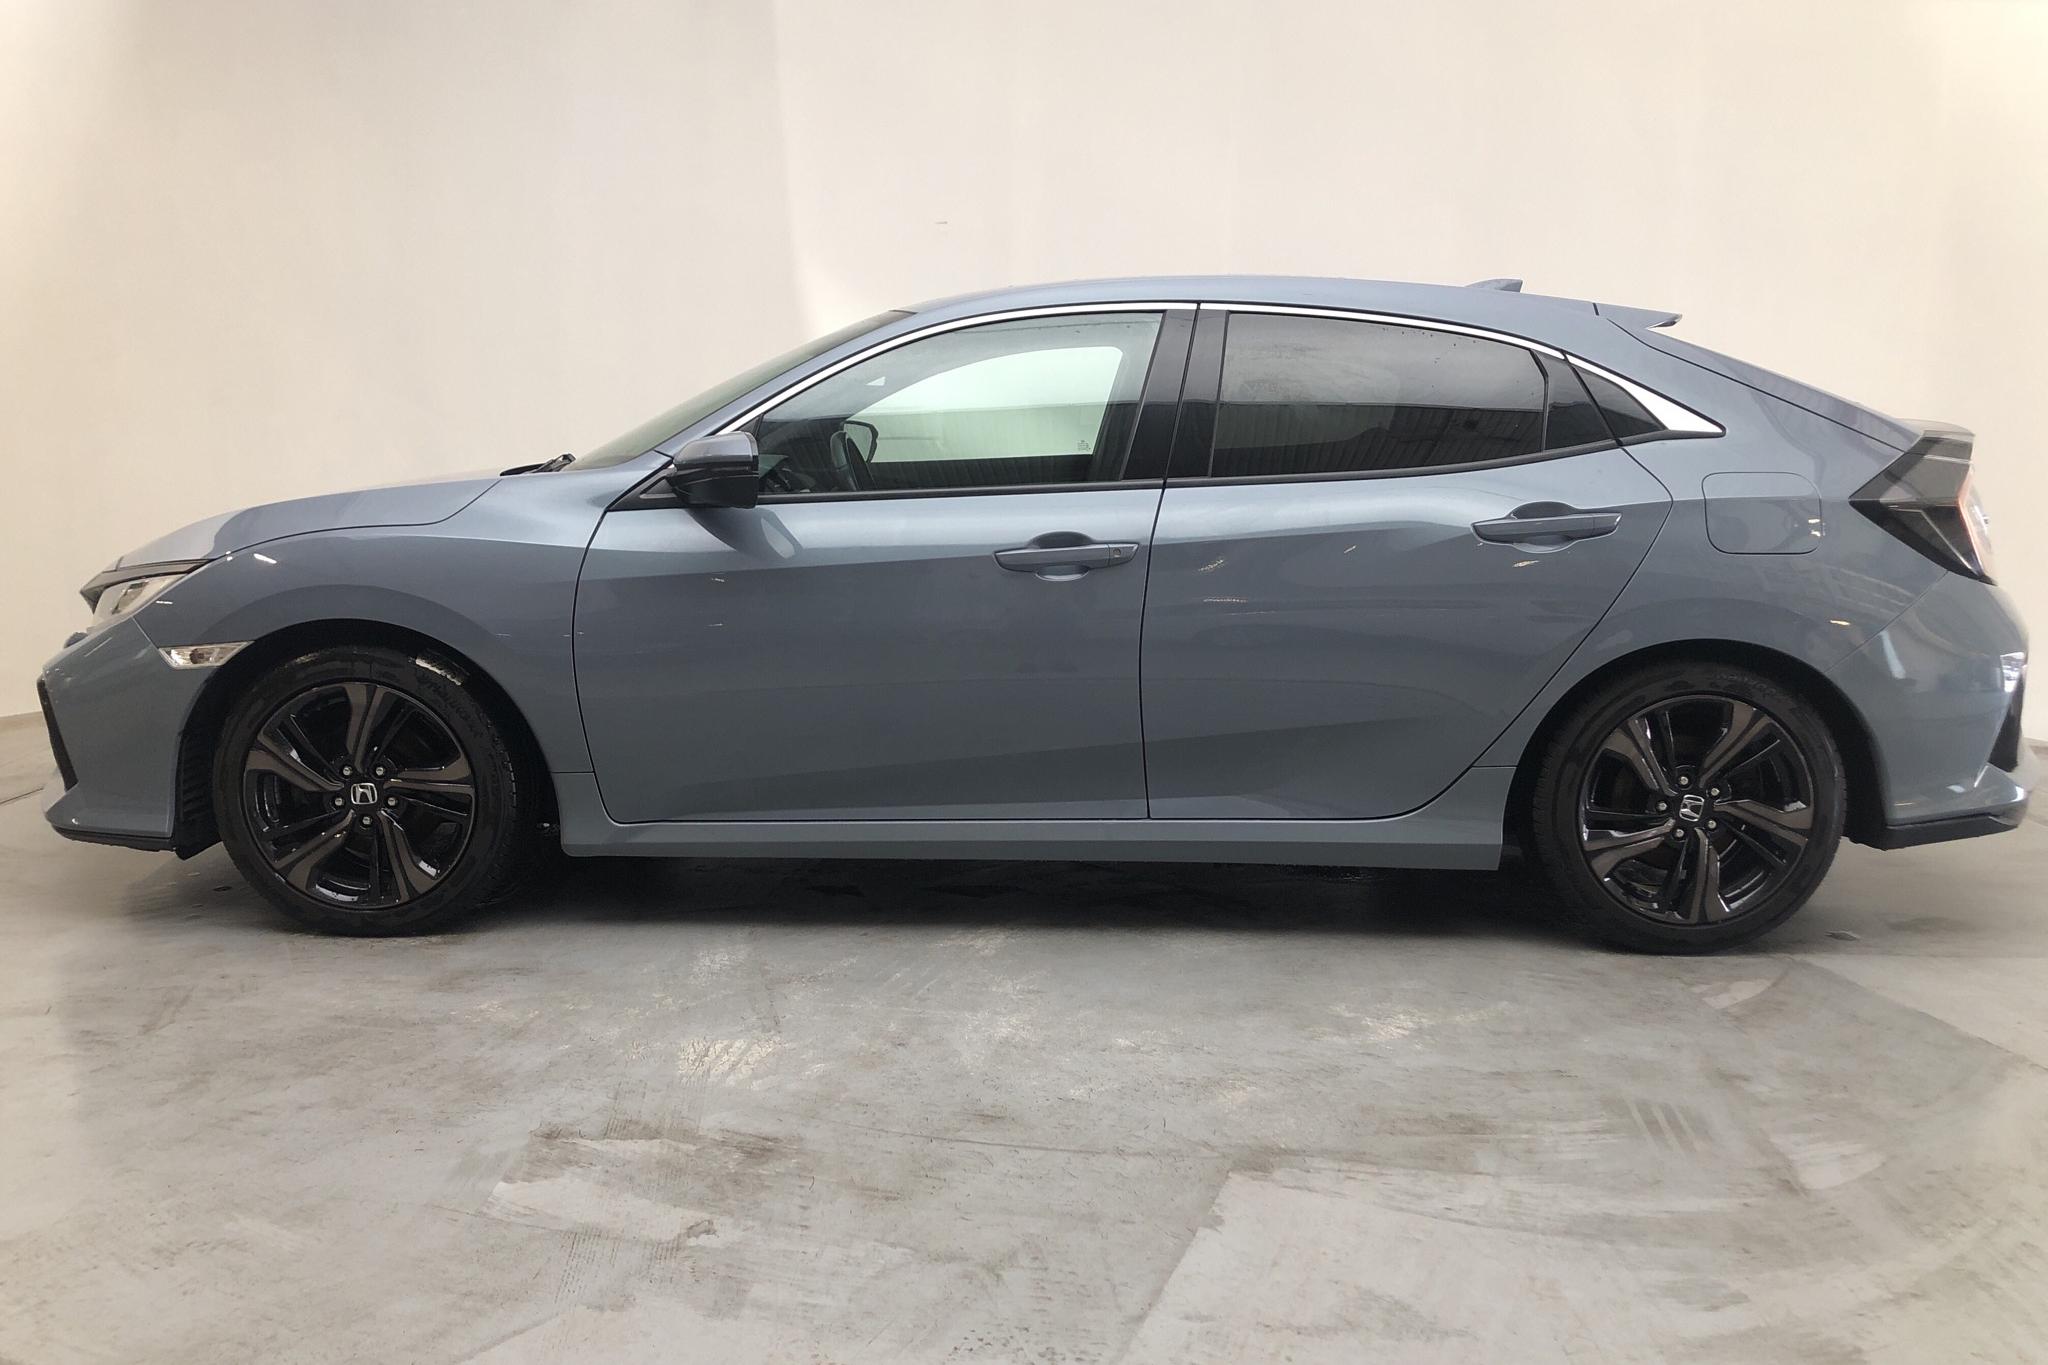 Honda Civic 1.6 i-DTEC 5dr (120hk) - 8 851 mil - Manuell - Dark Grey - 2018